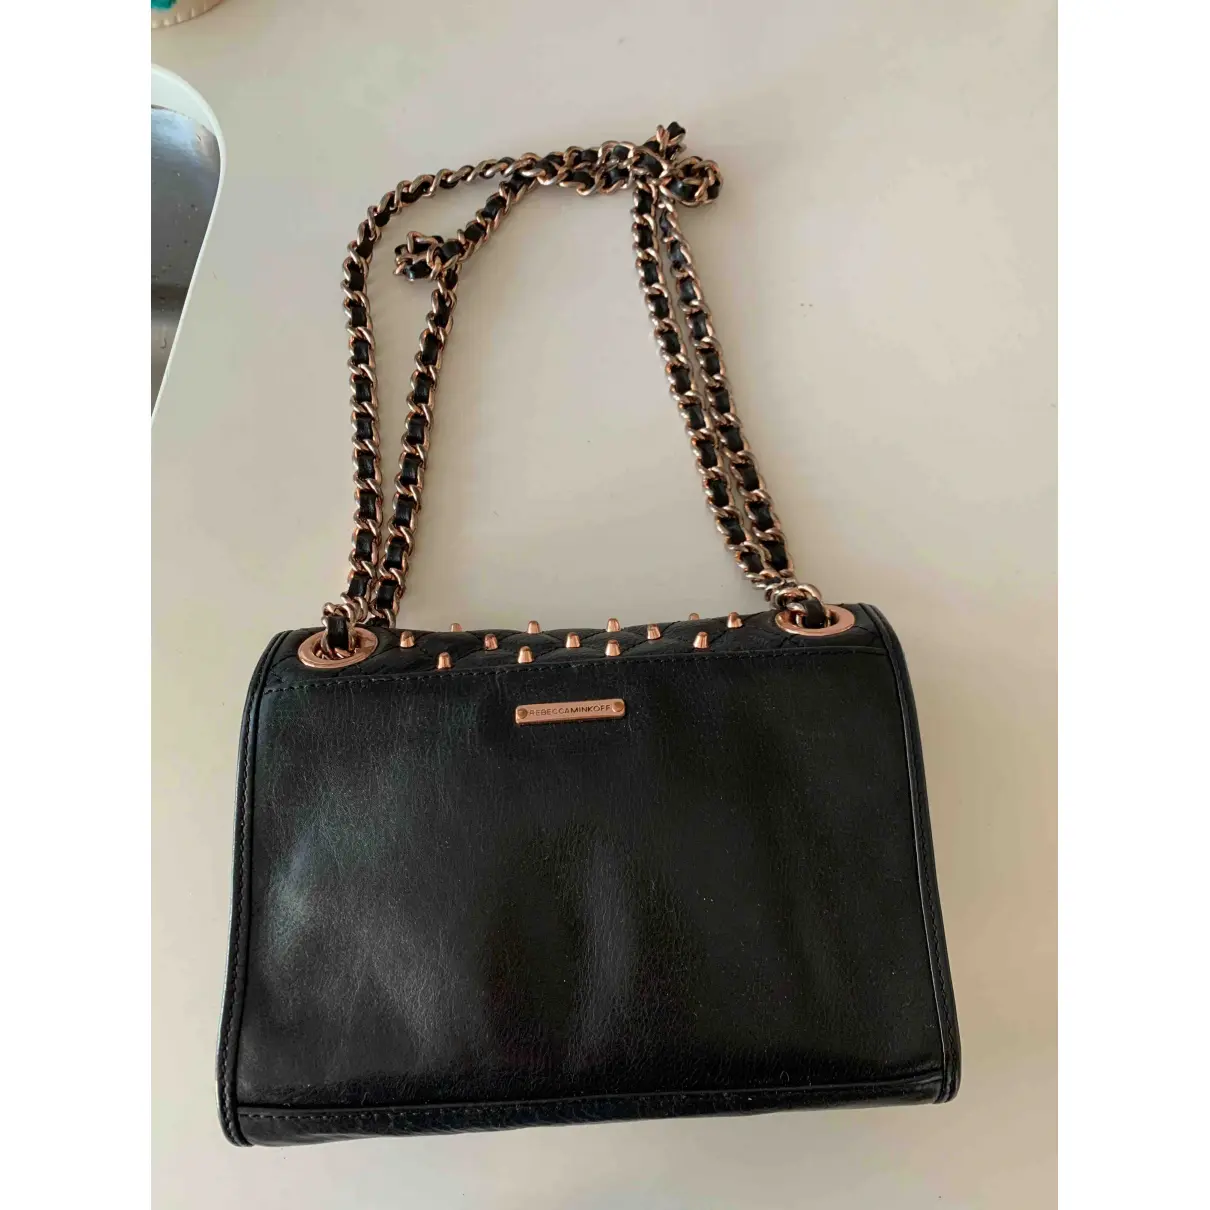 Buy Rebecca Minkoff Leather mini bag online